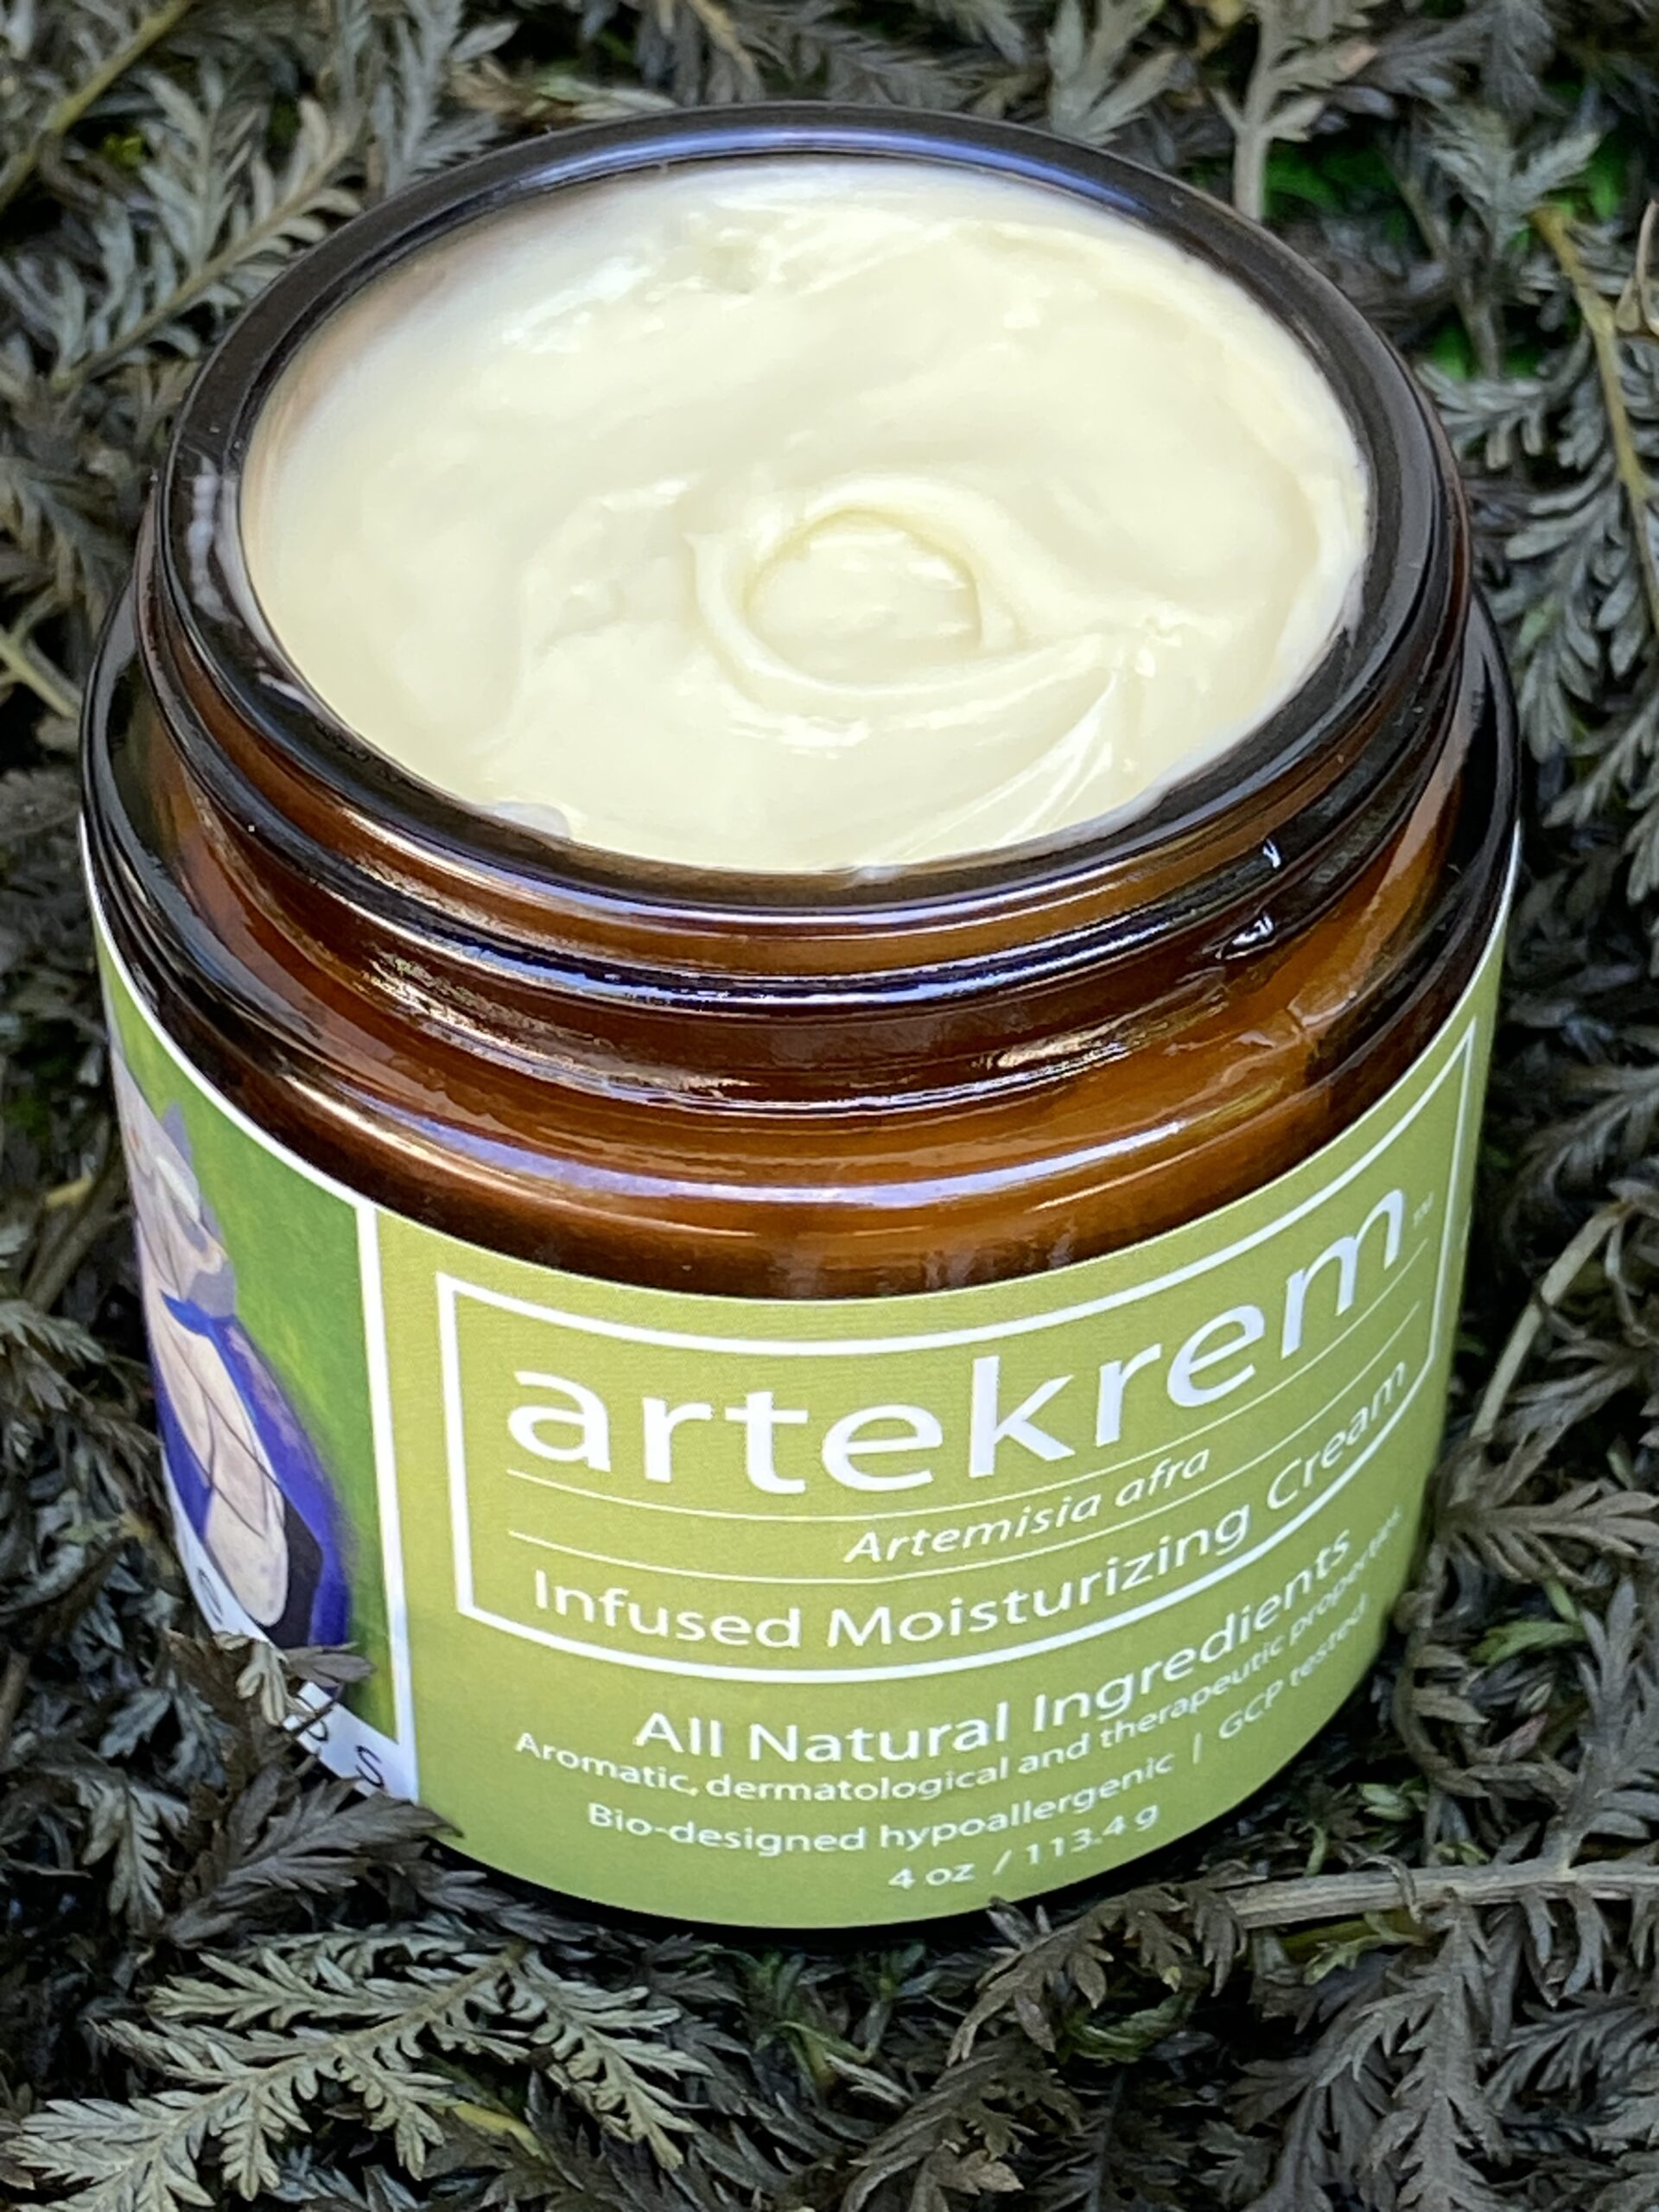 artekrem cream